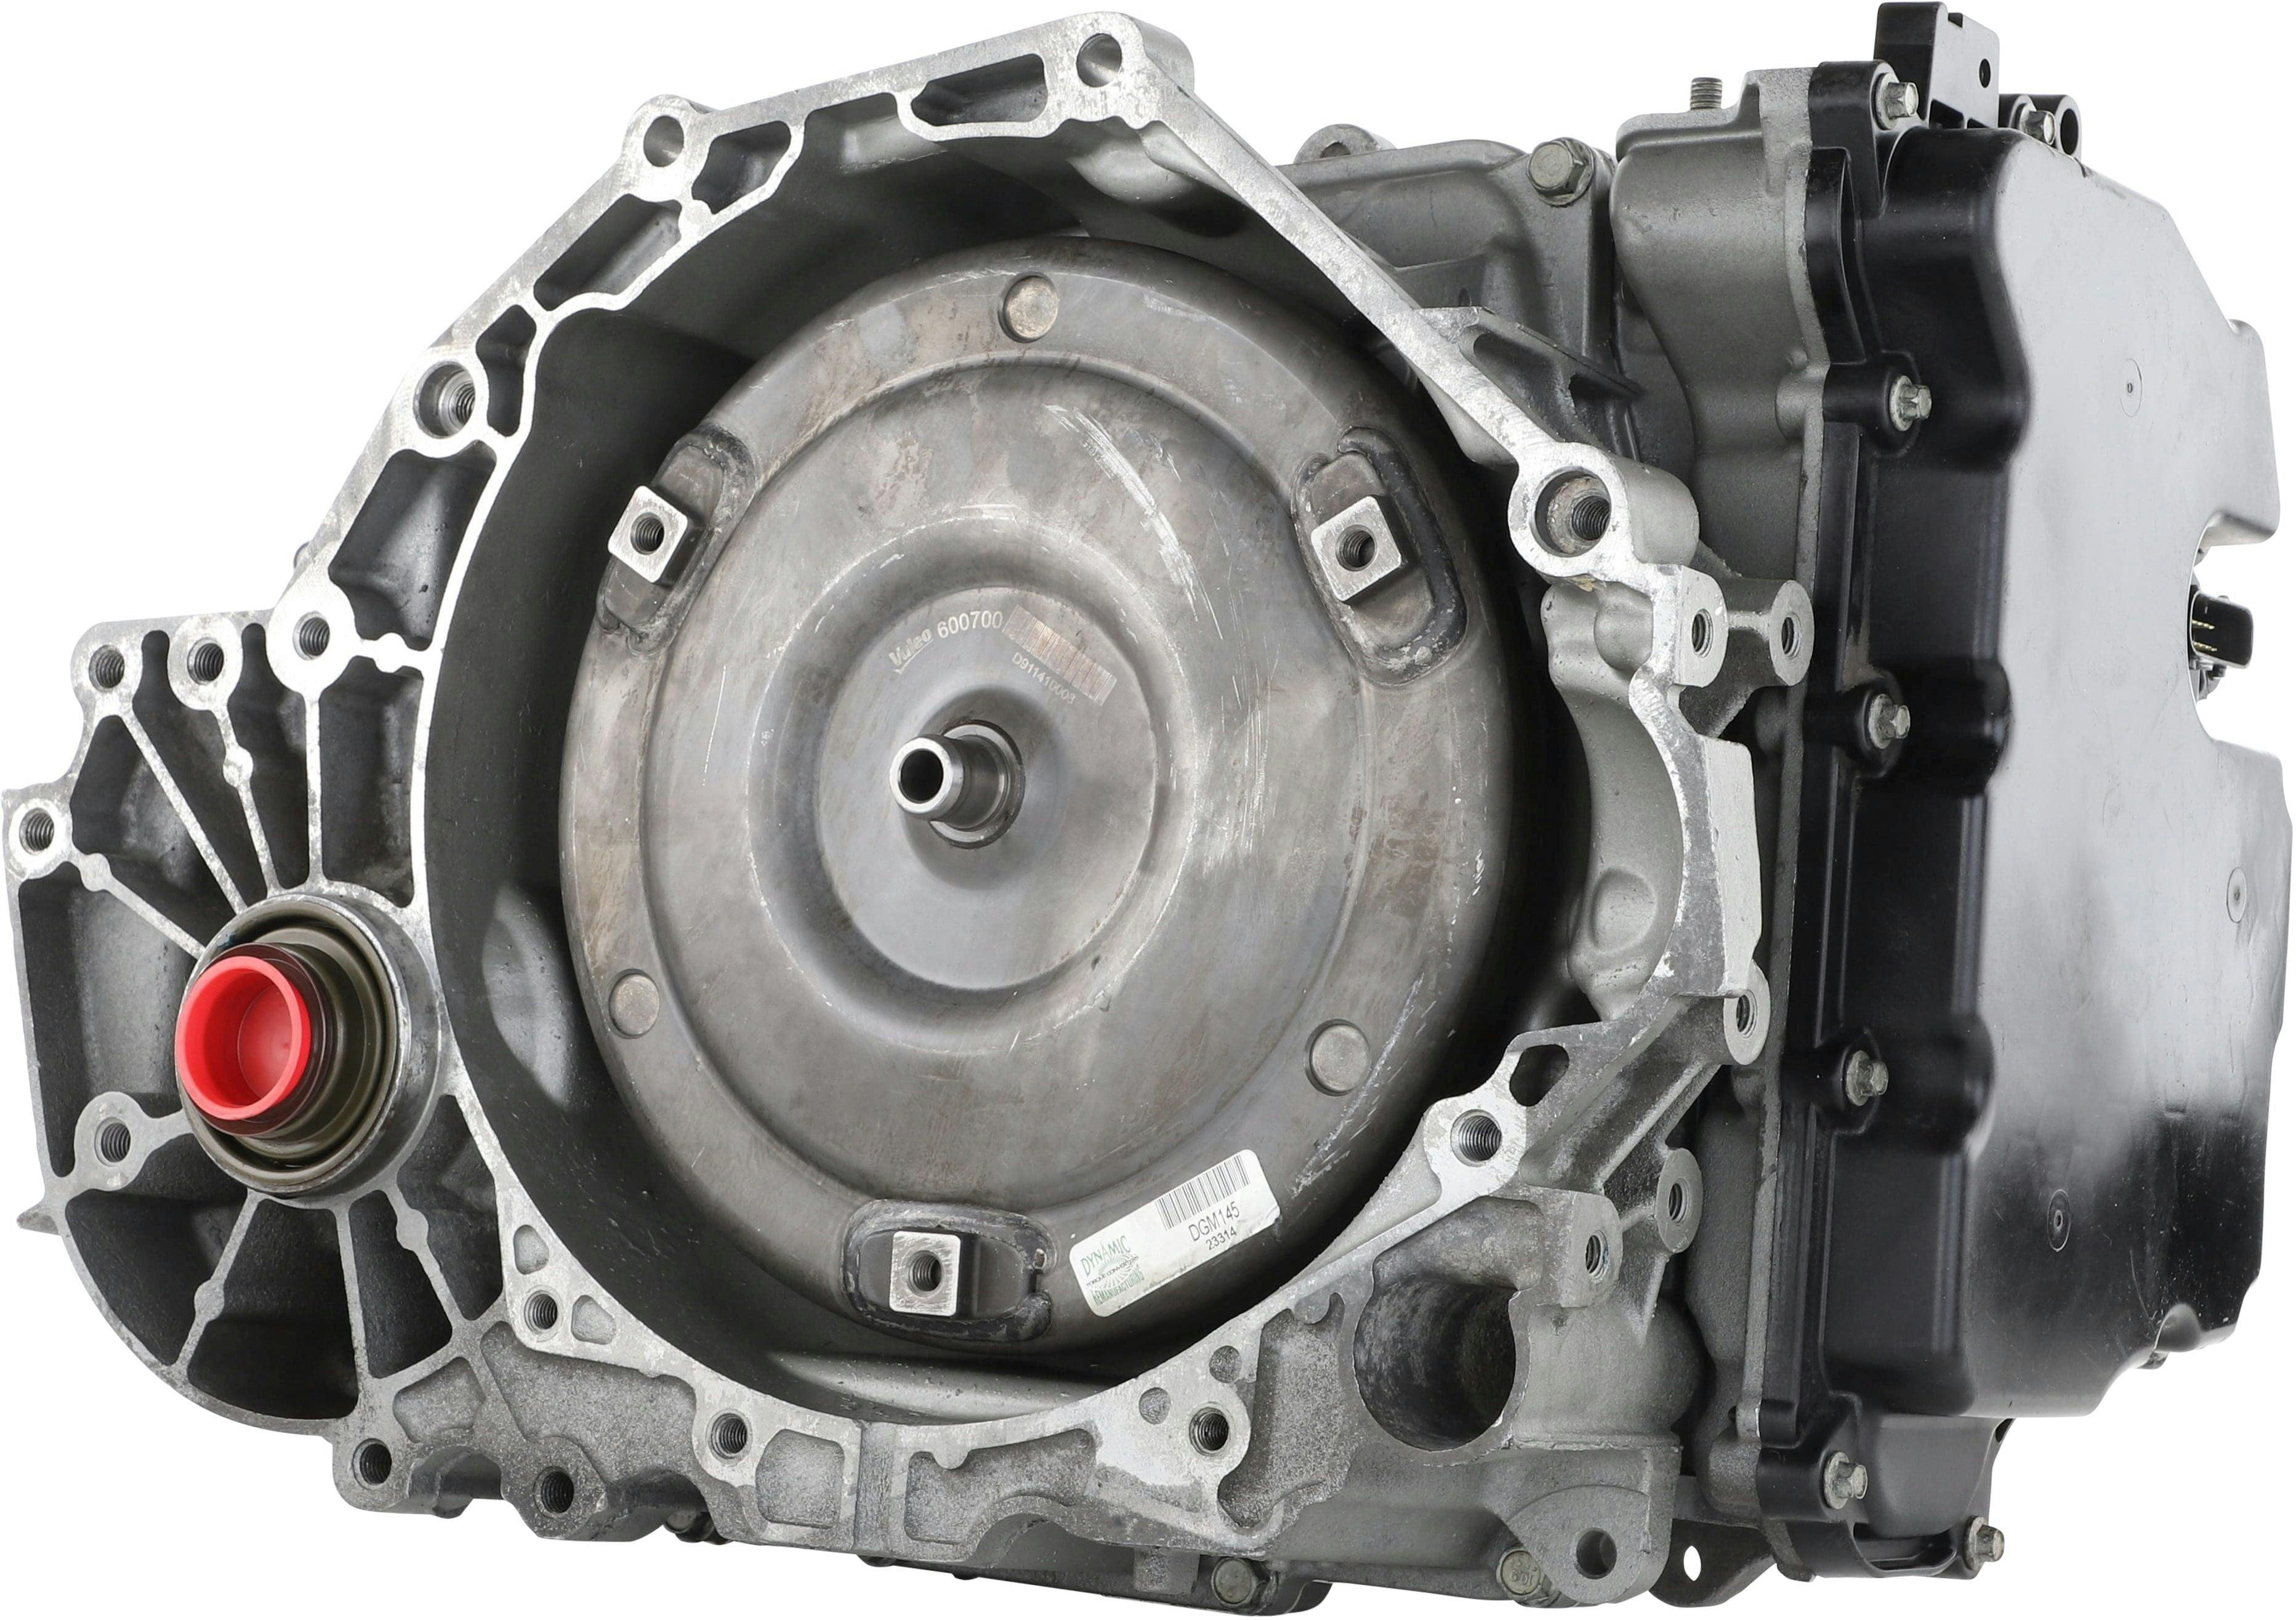 Automatic Transmission for 2009-2010 Chevrolet Malibu/Pontiac G6/Saturn Aura FWD with 2.4L Inline-4 Engine